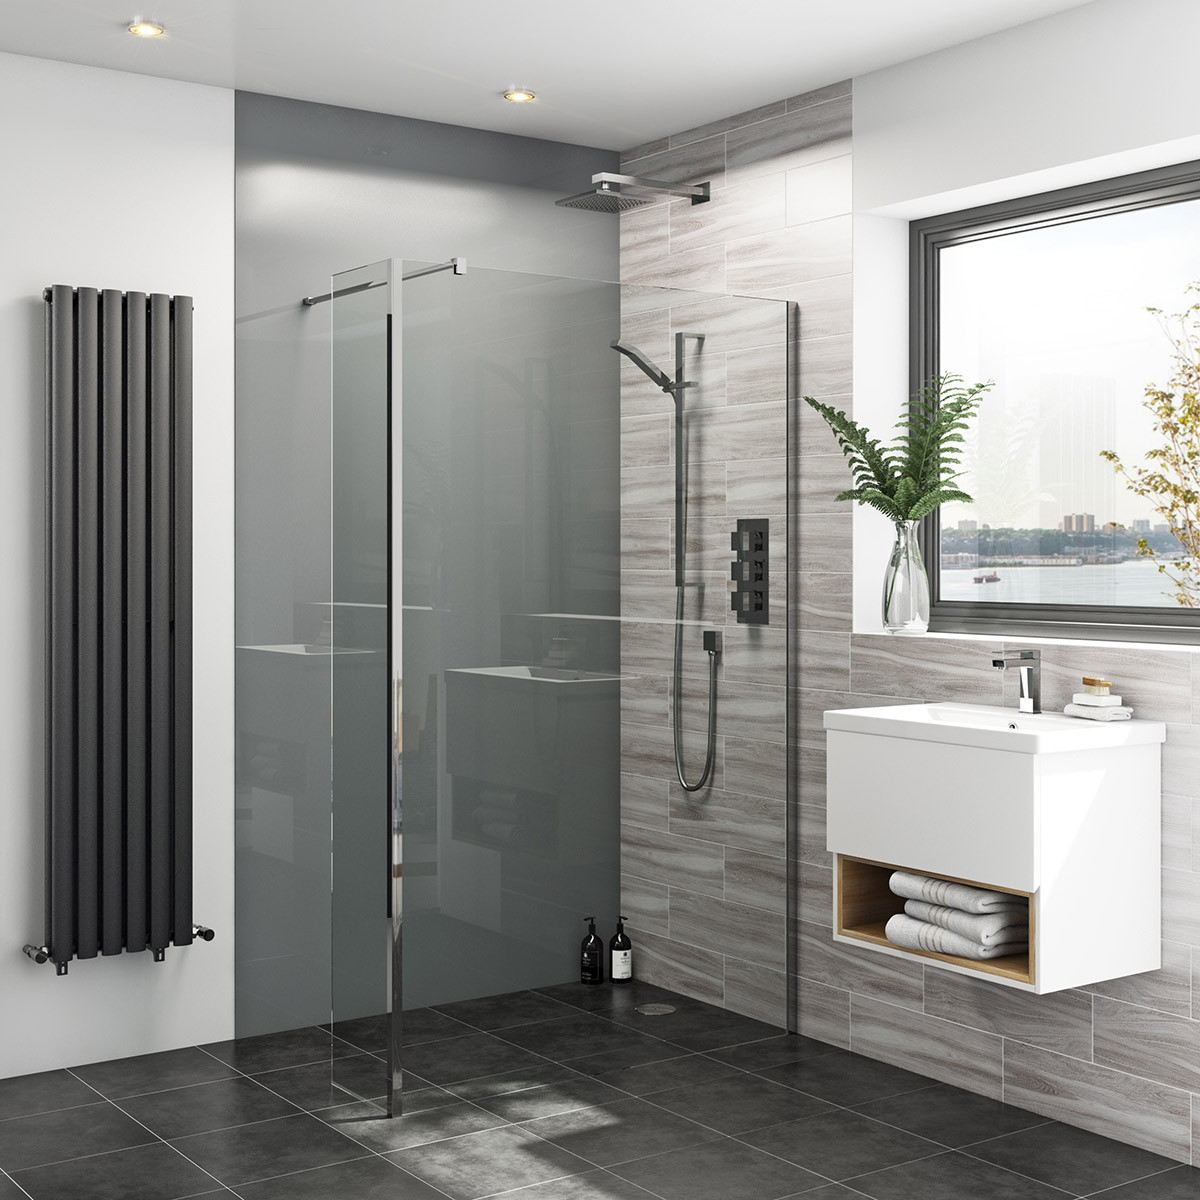 Wall Panel For Bathroom
 Zenolite plus ash acrylic shower wall panel 2070 x 1000